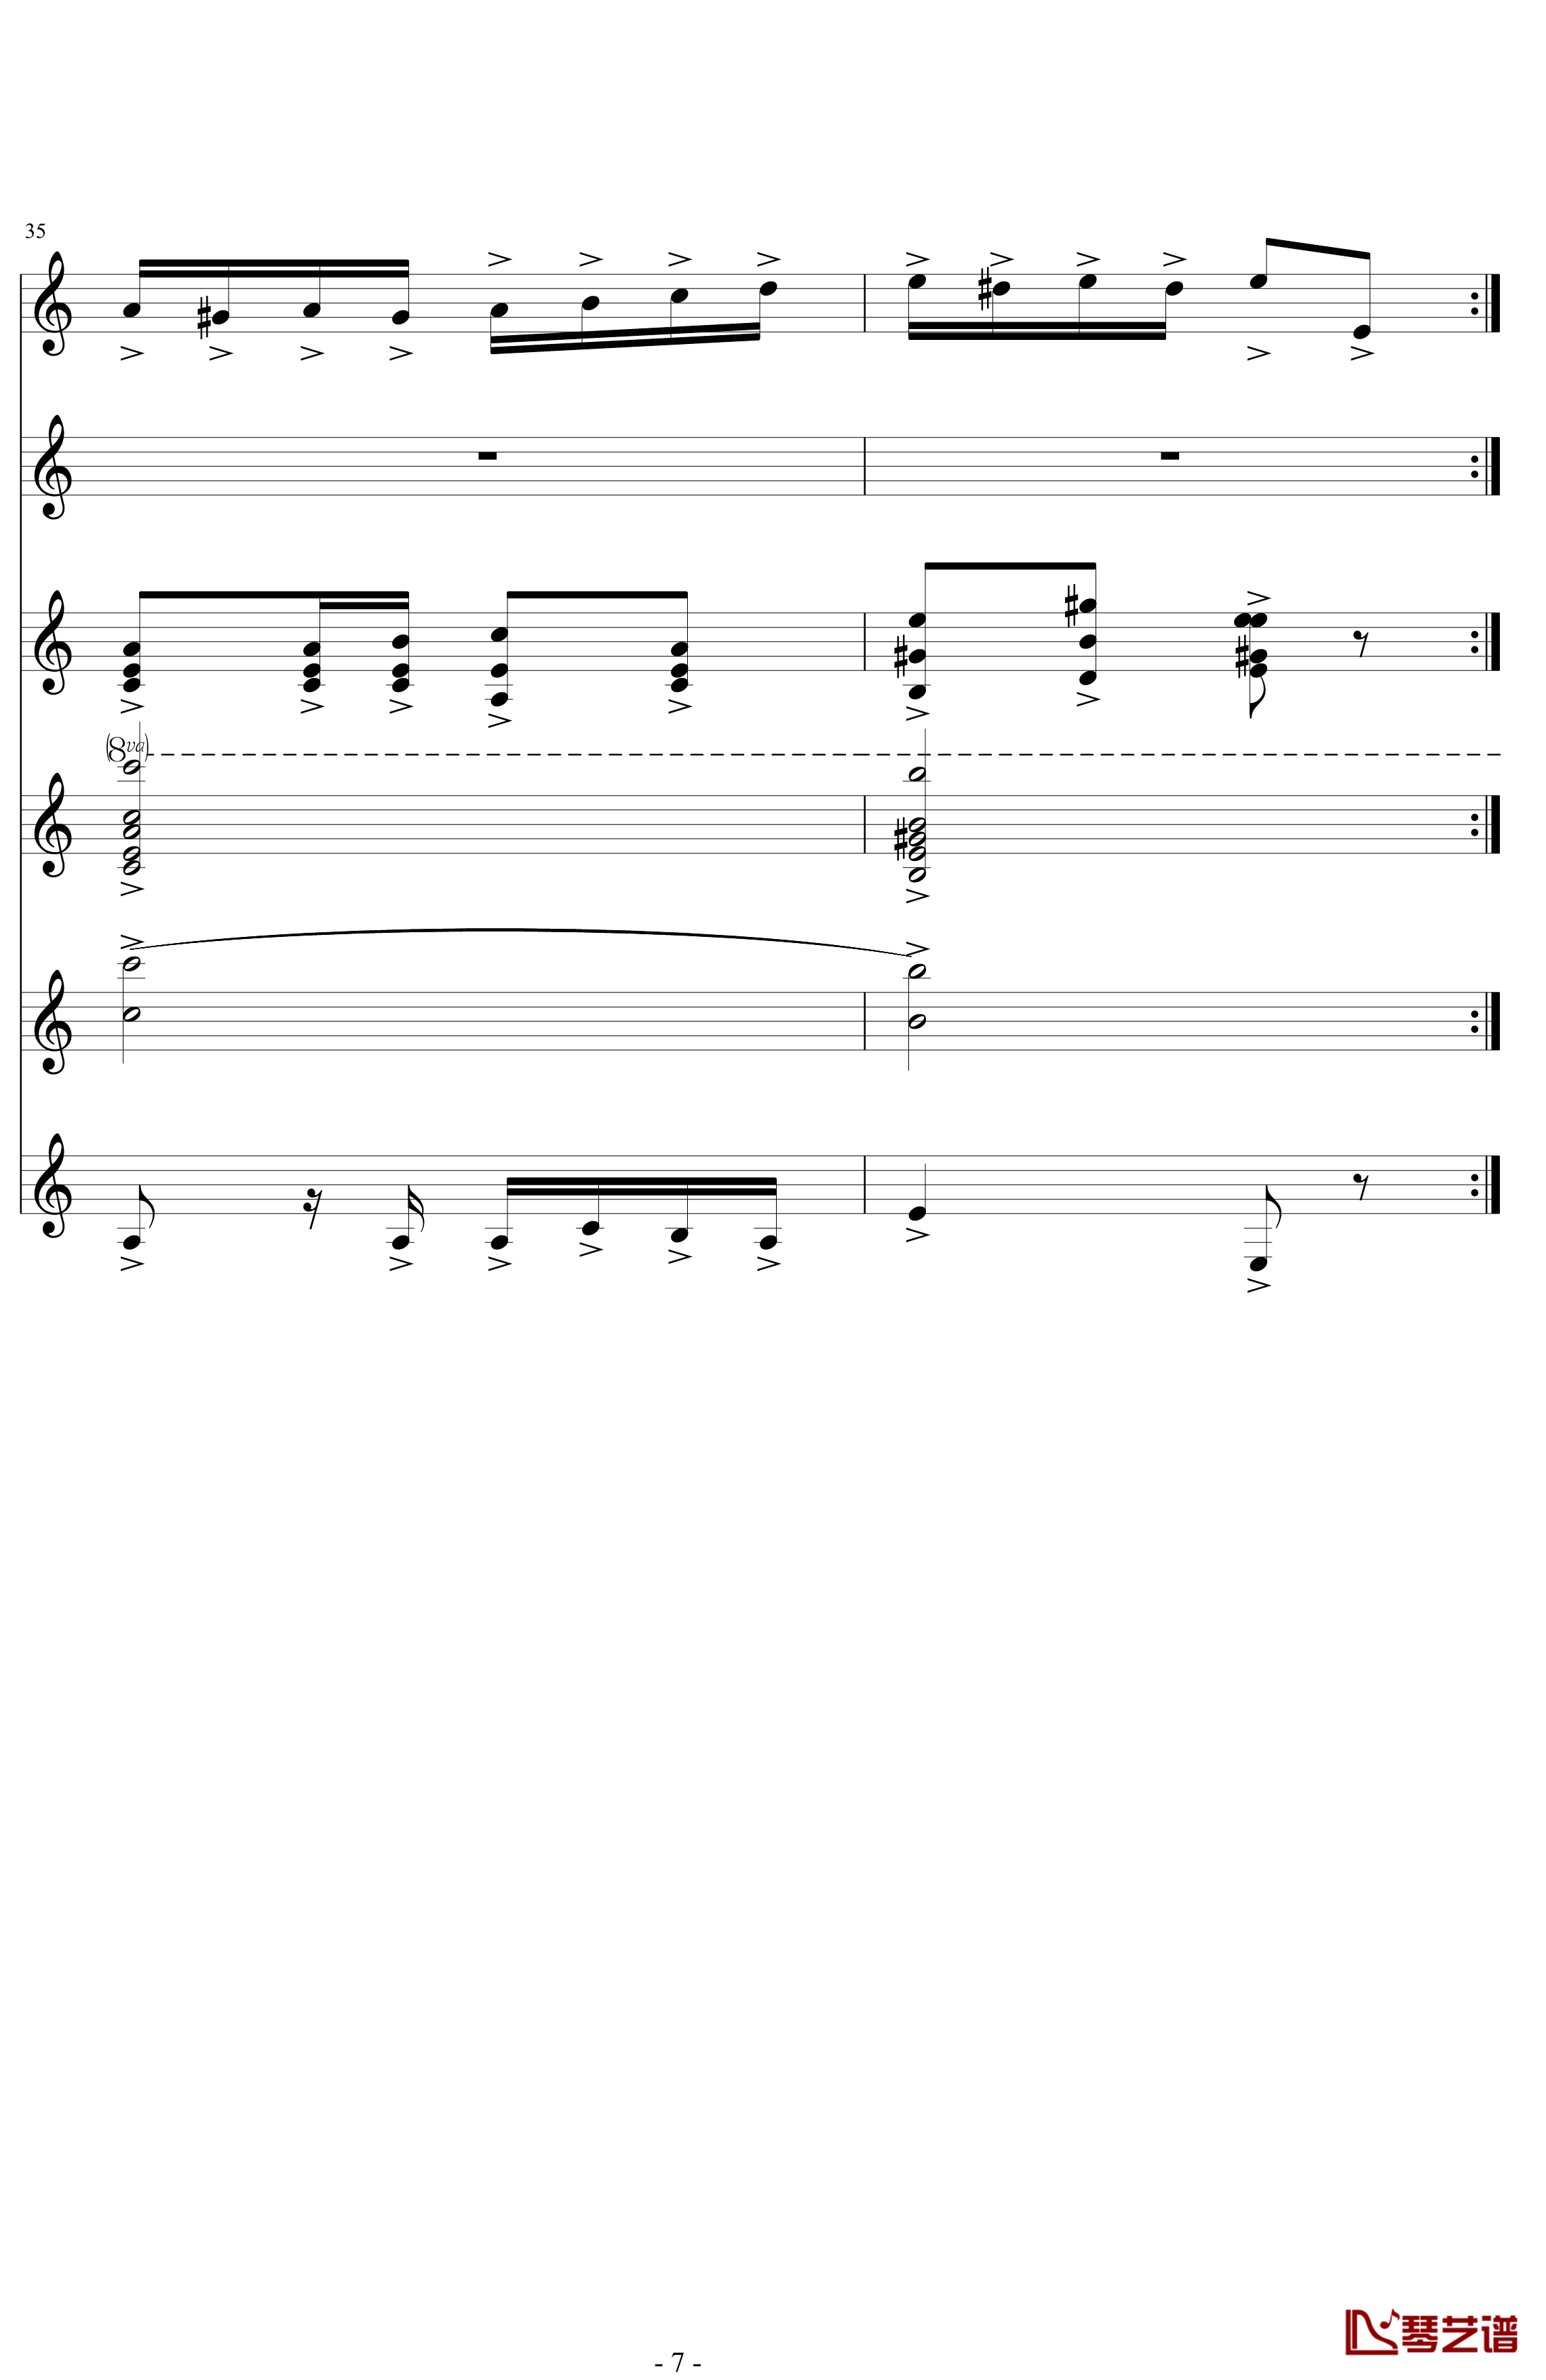 my Edition of Paganini'theme钢琴谱-未知分类7